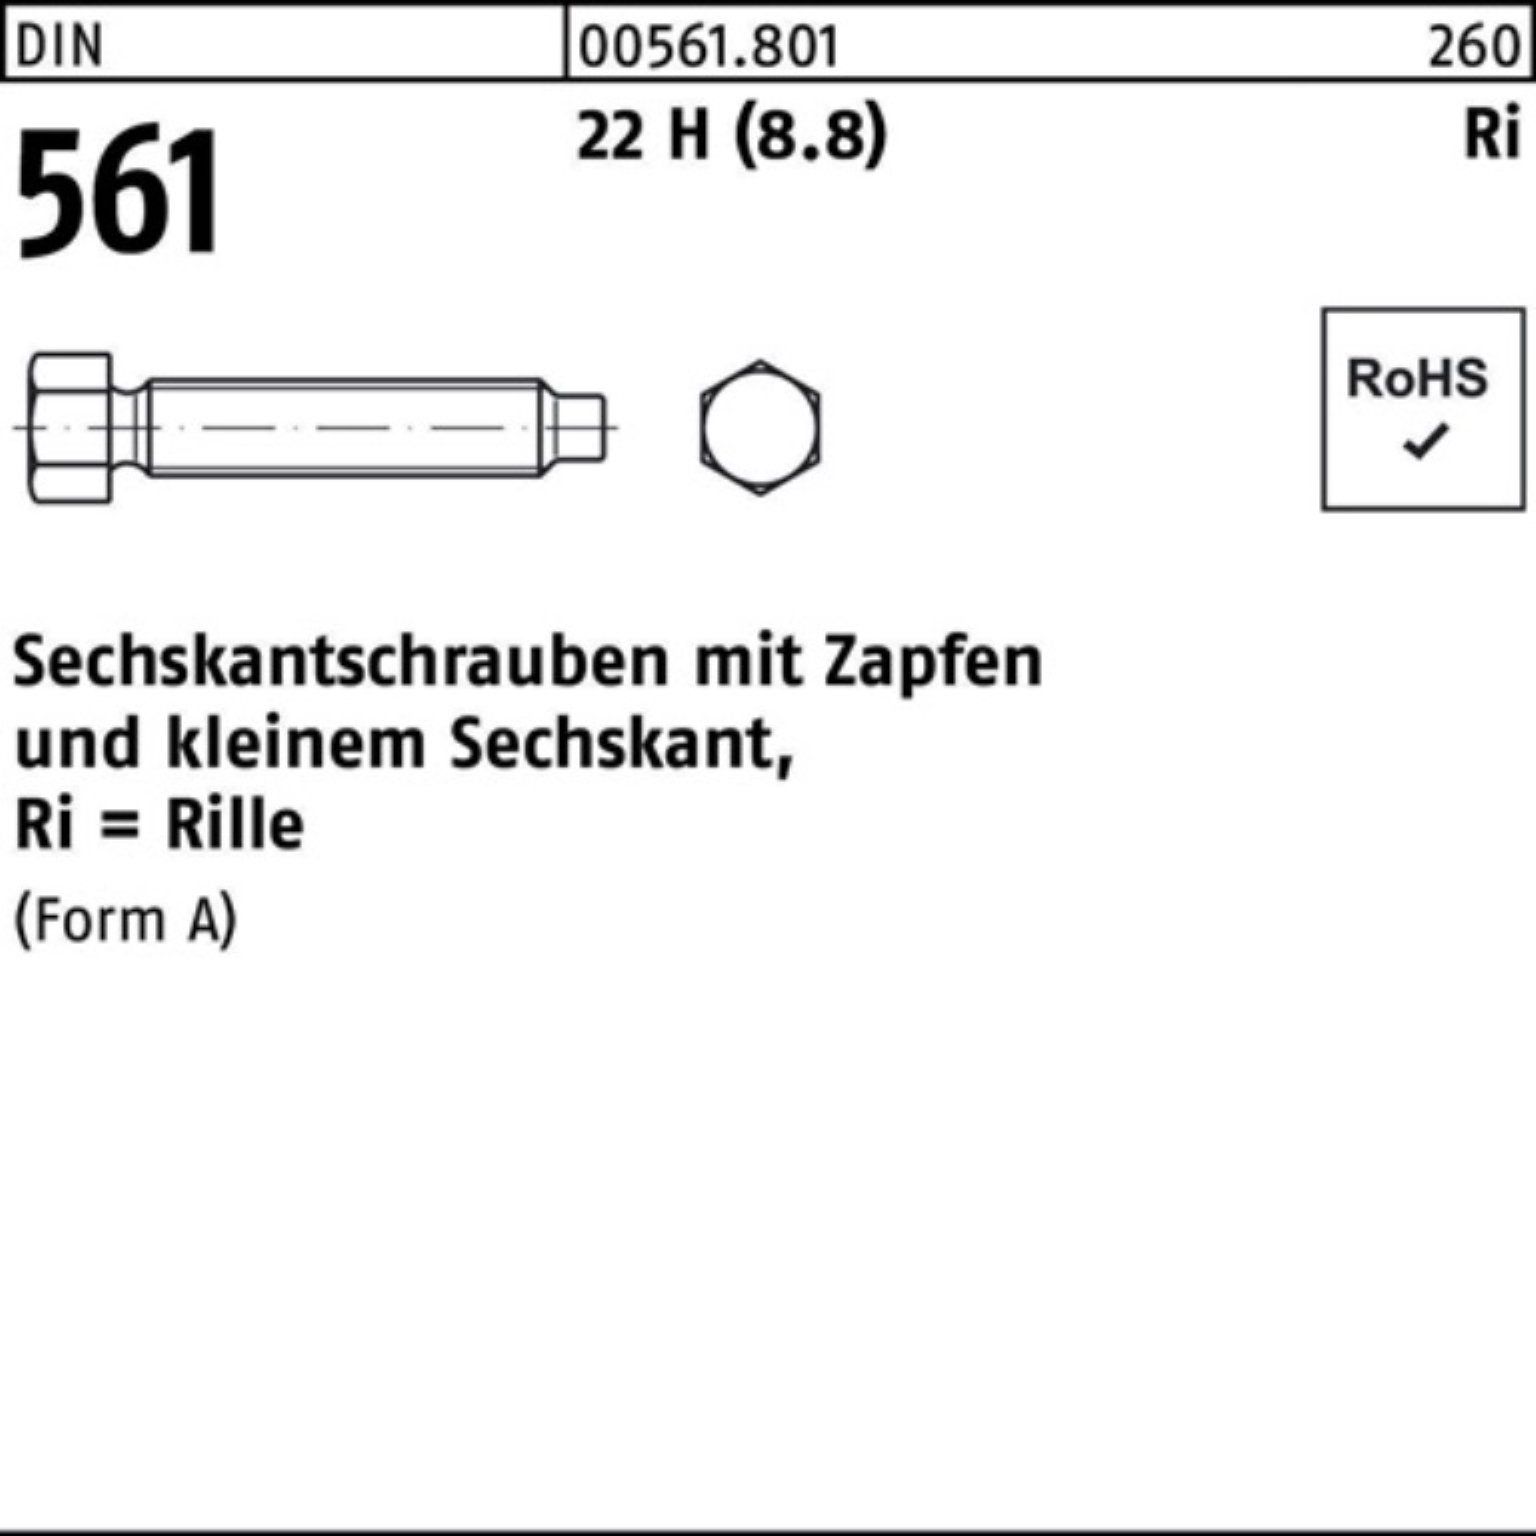 Reyher Sechskantschraube 100er Pack Sechskantschraube DIN 561 Zapfen AM 8x 40 22 H (8.8) 100 St